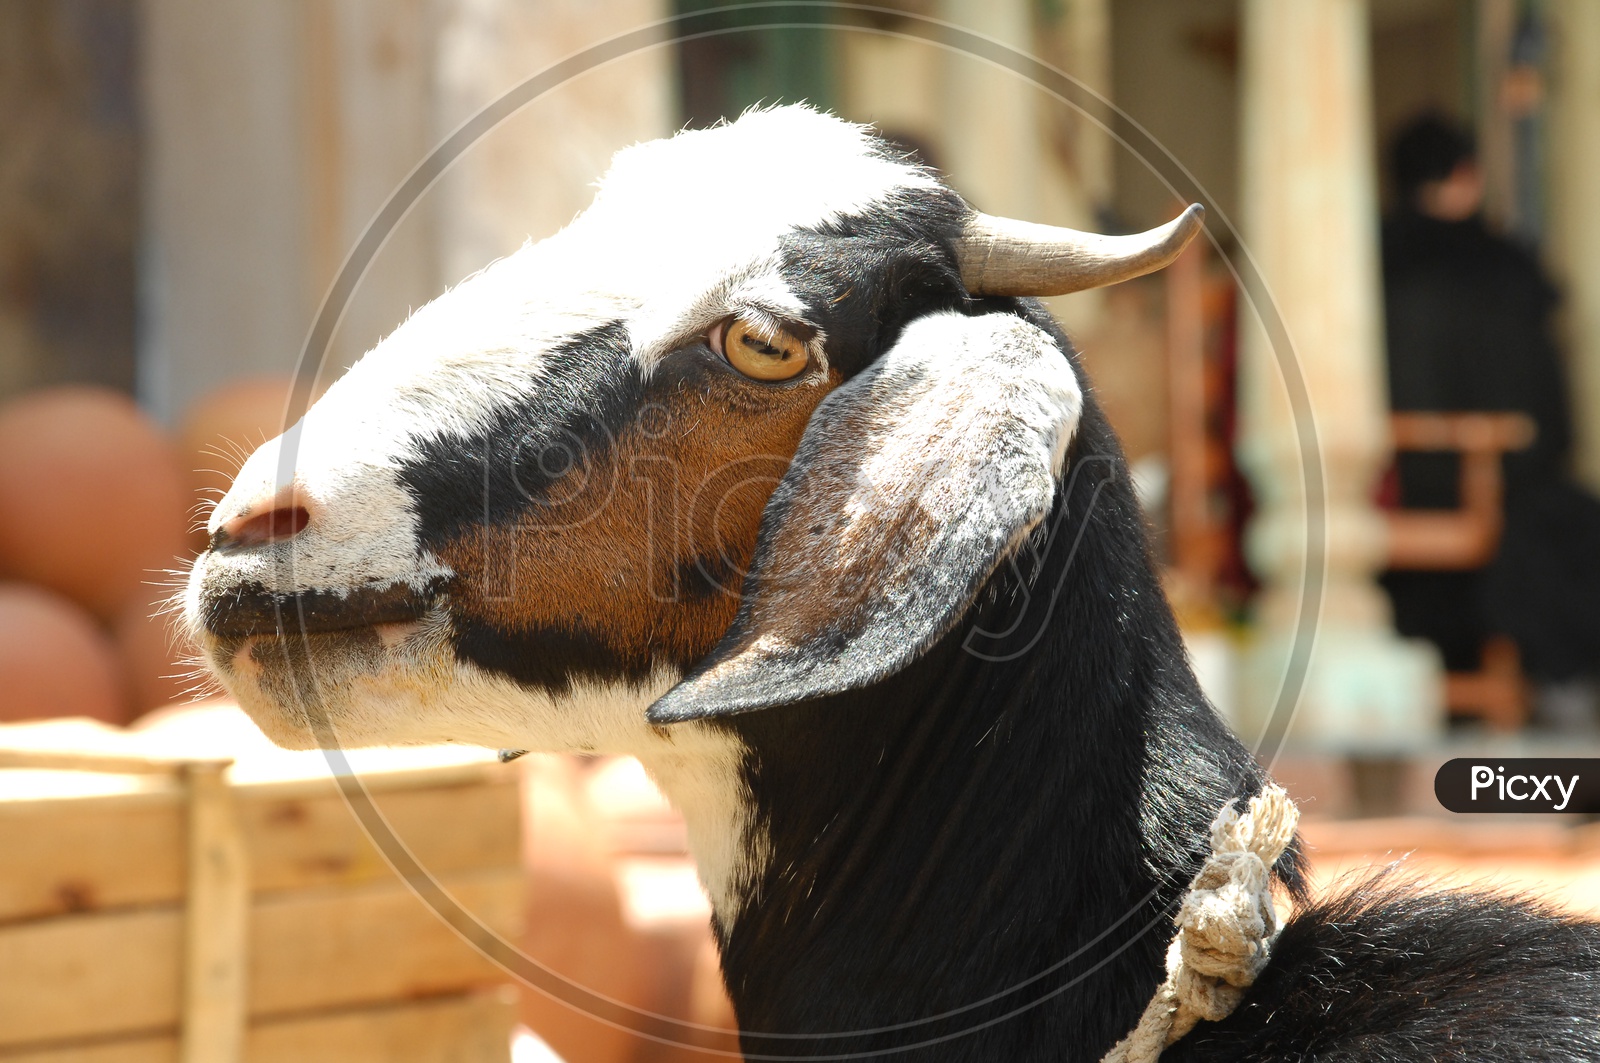 A Goat's head